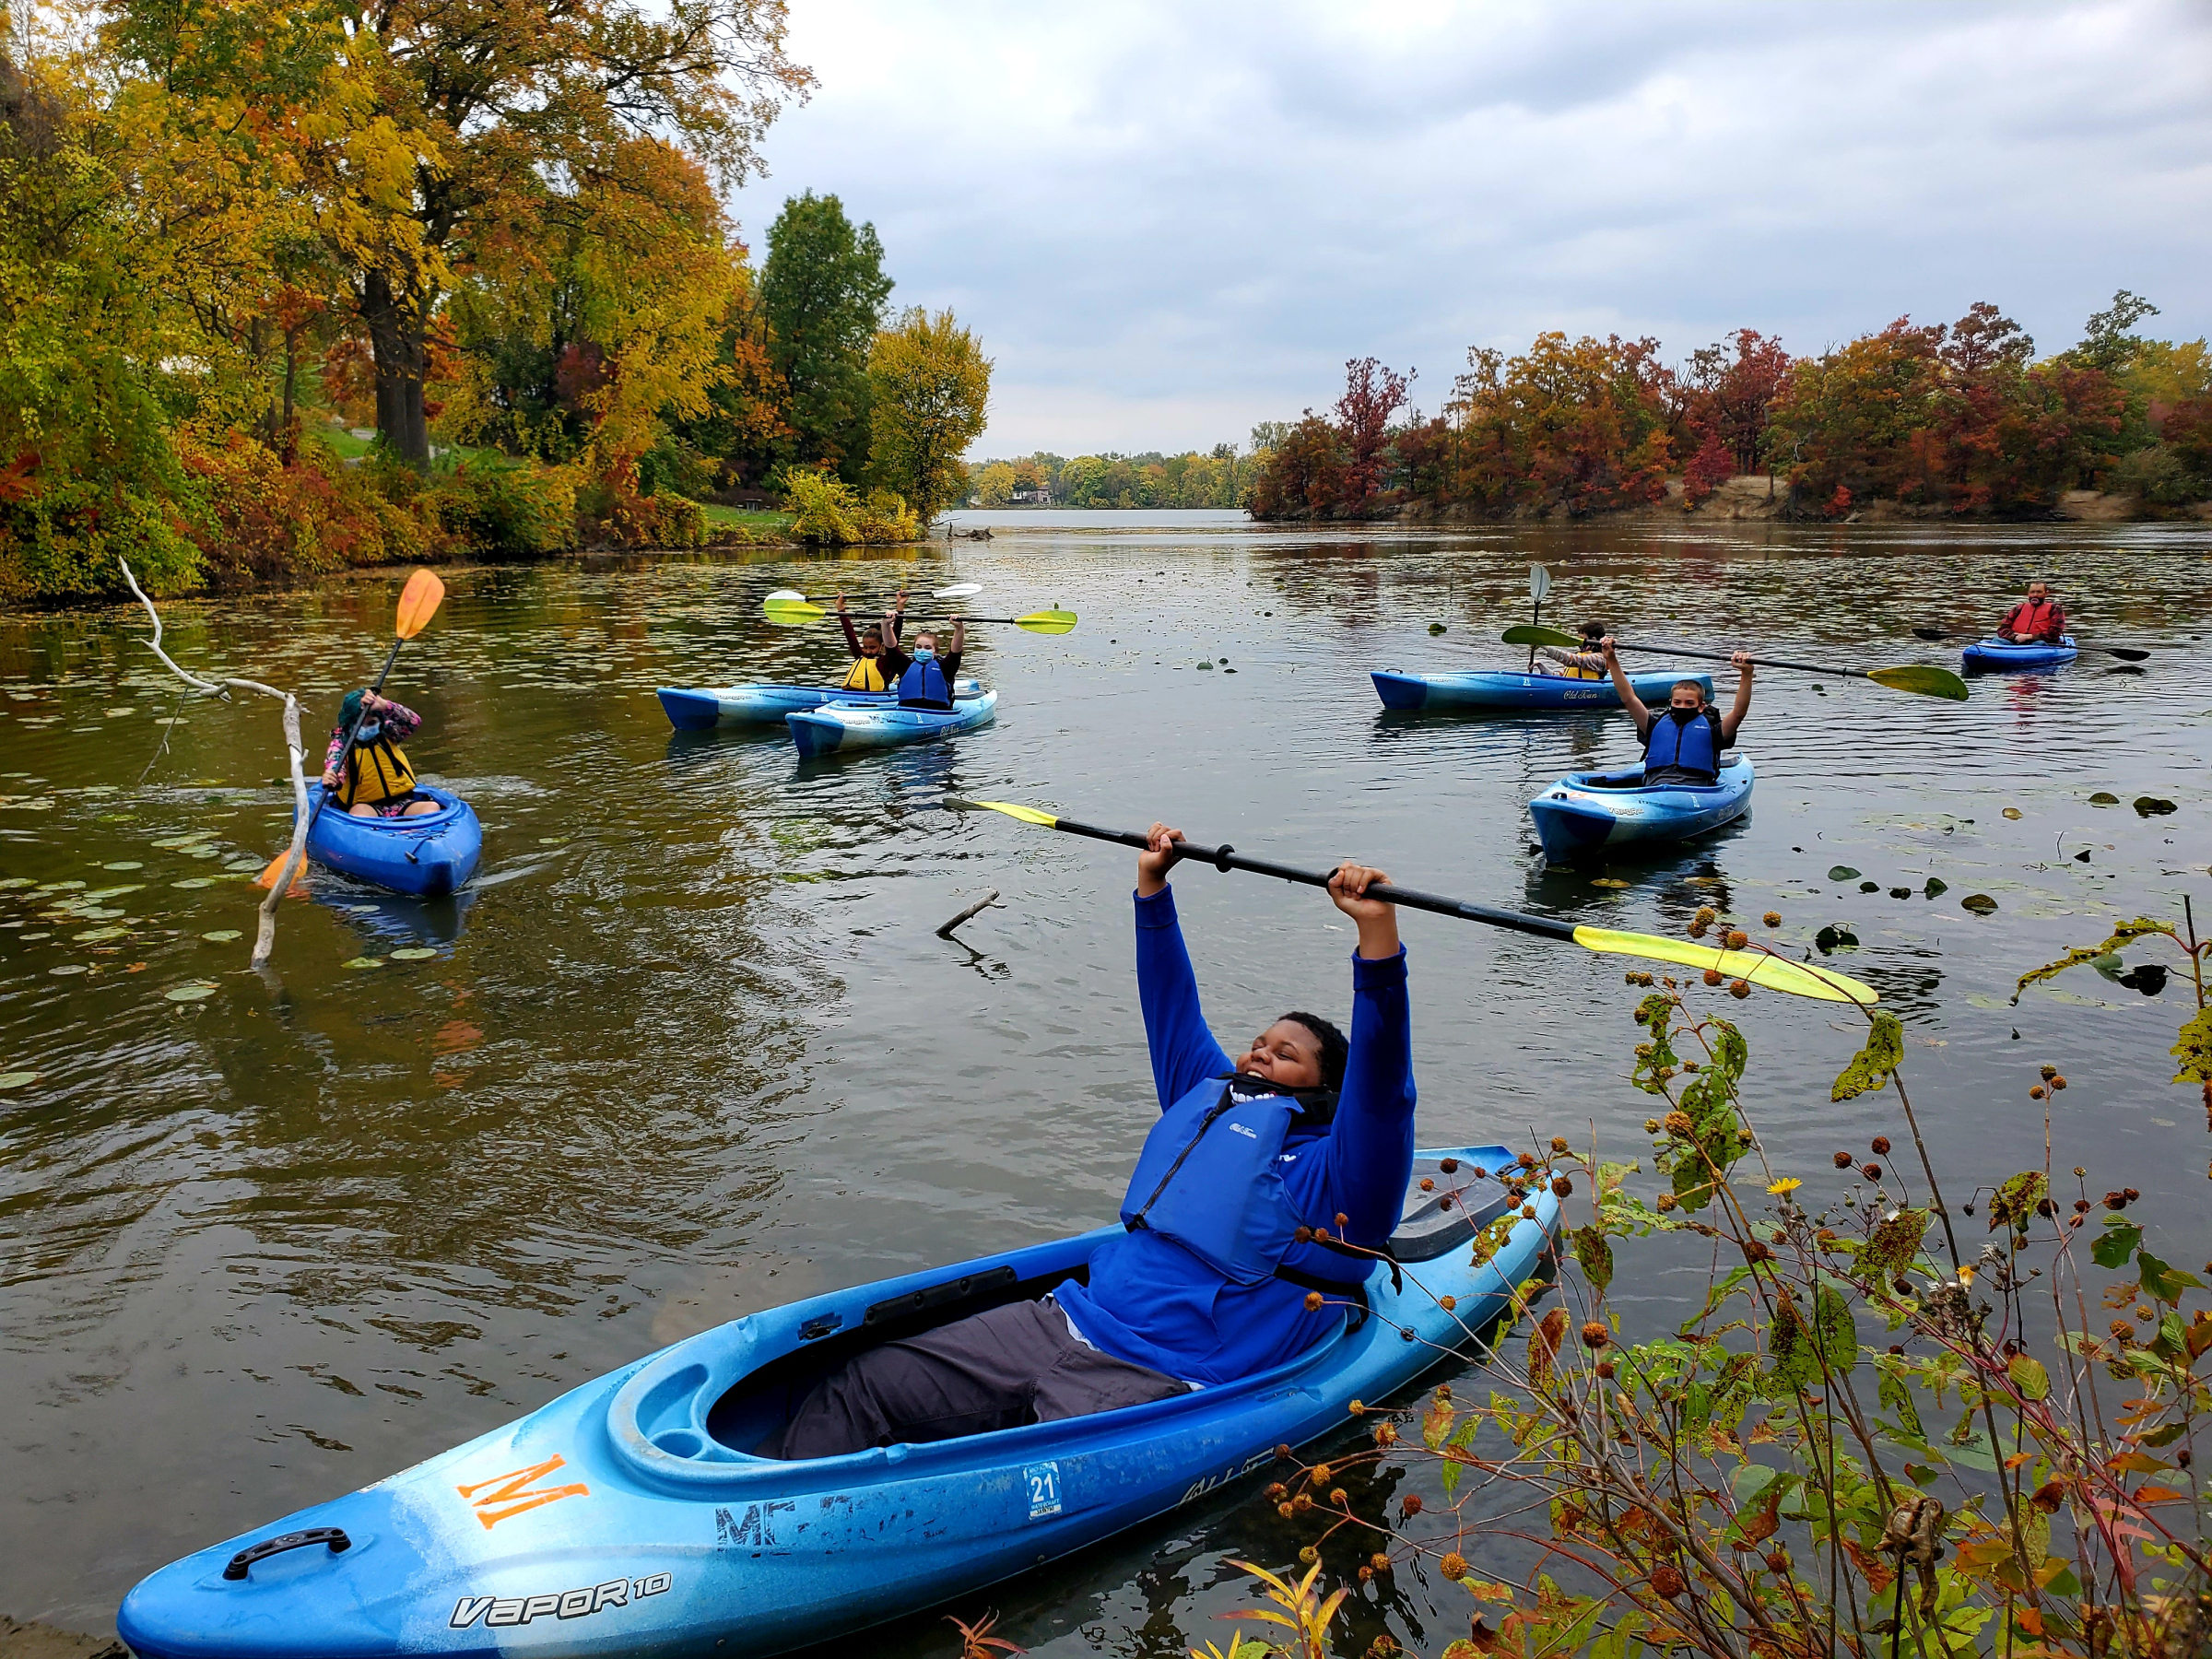 Students kayaking on river